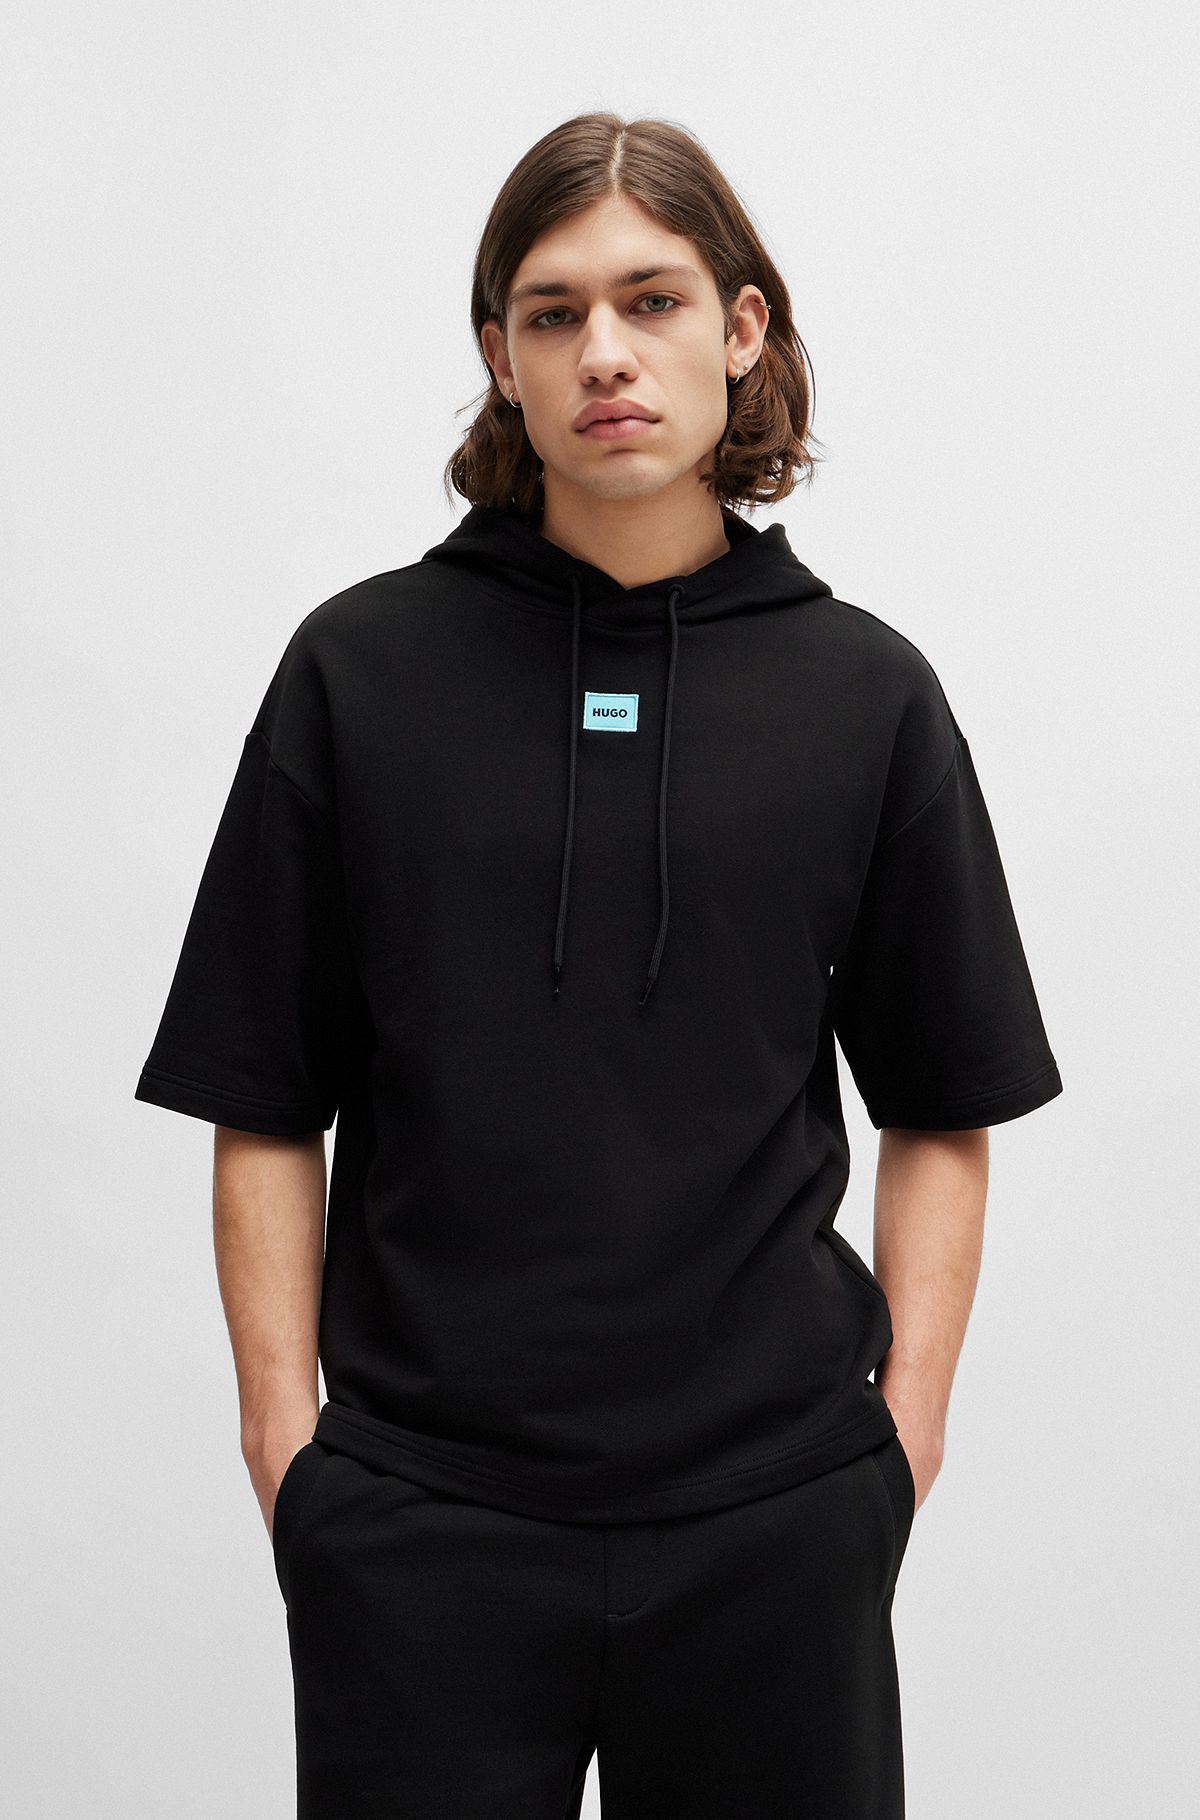 Hooded sweatshirts in Black by HUGO BOSS